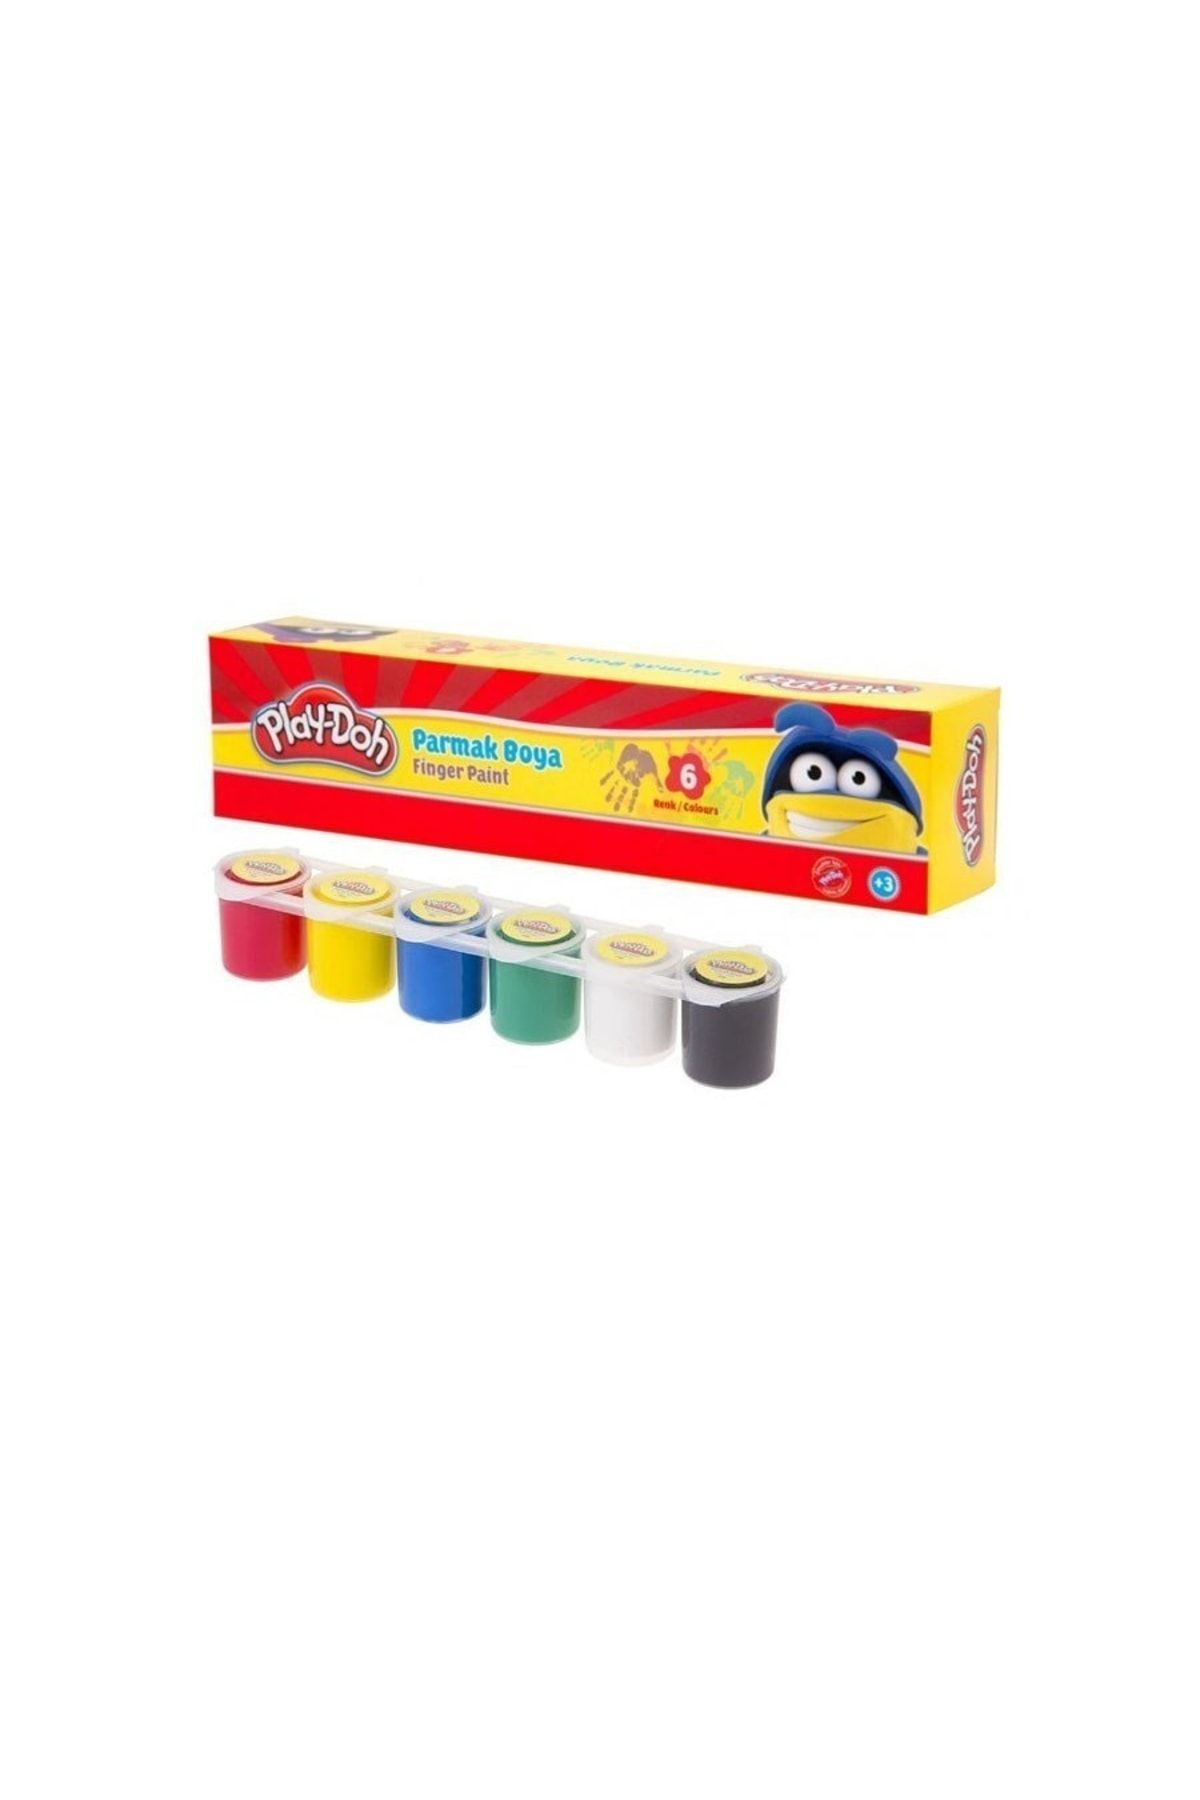 Play Doh Play-doh Parmak Boyası 6 Renk